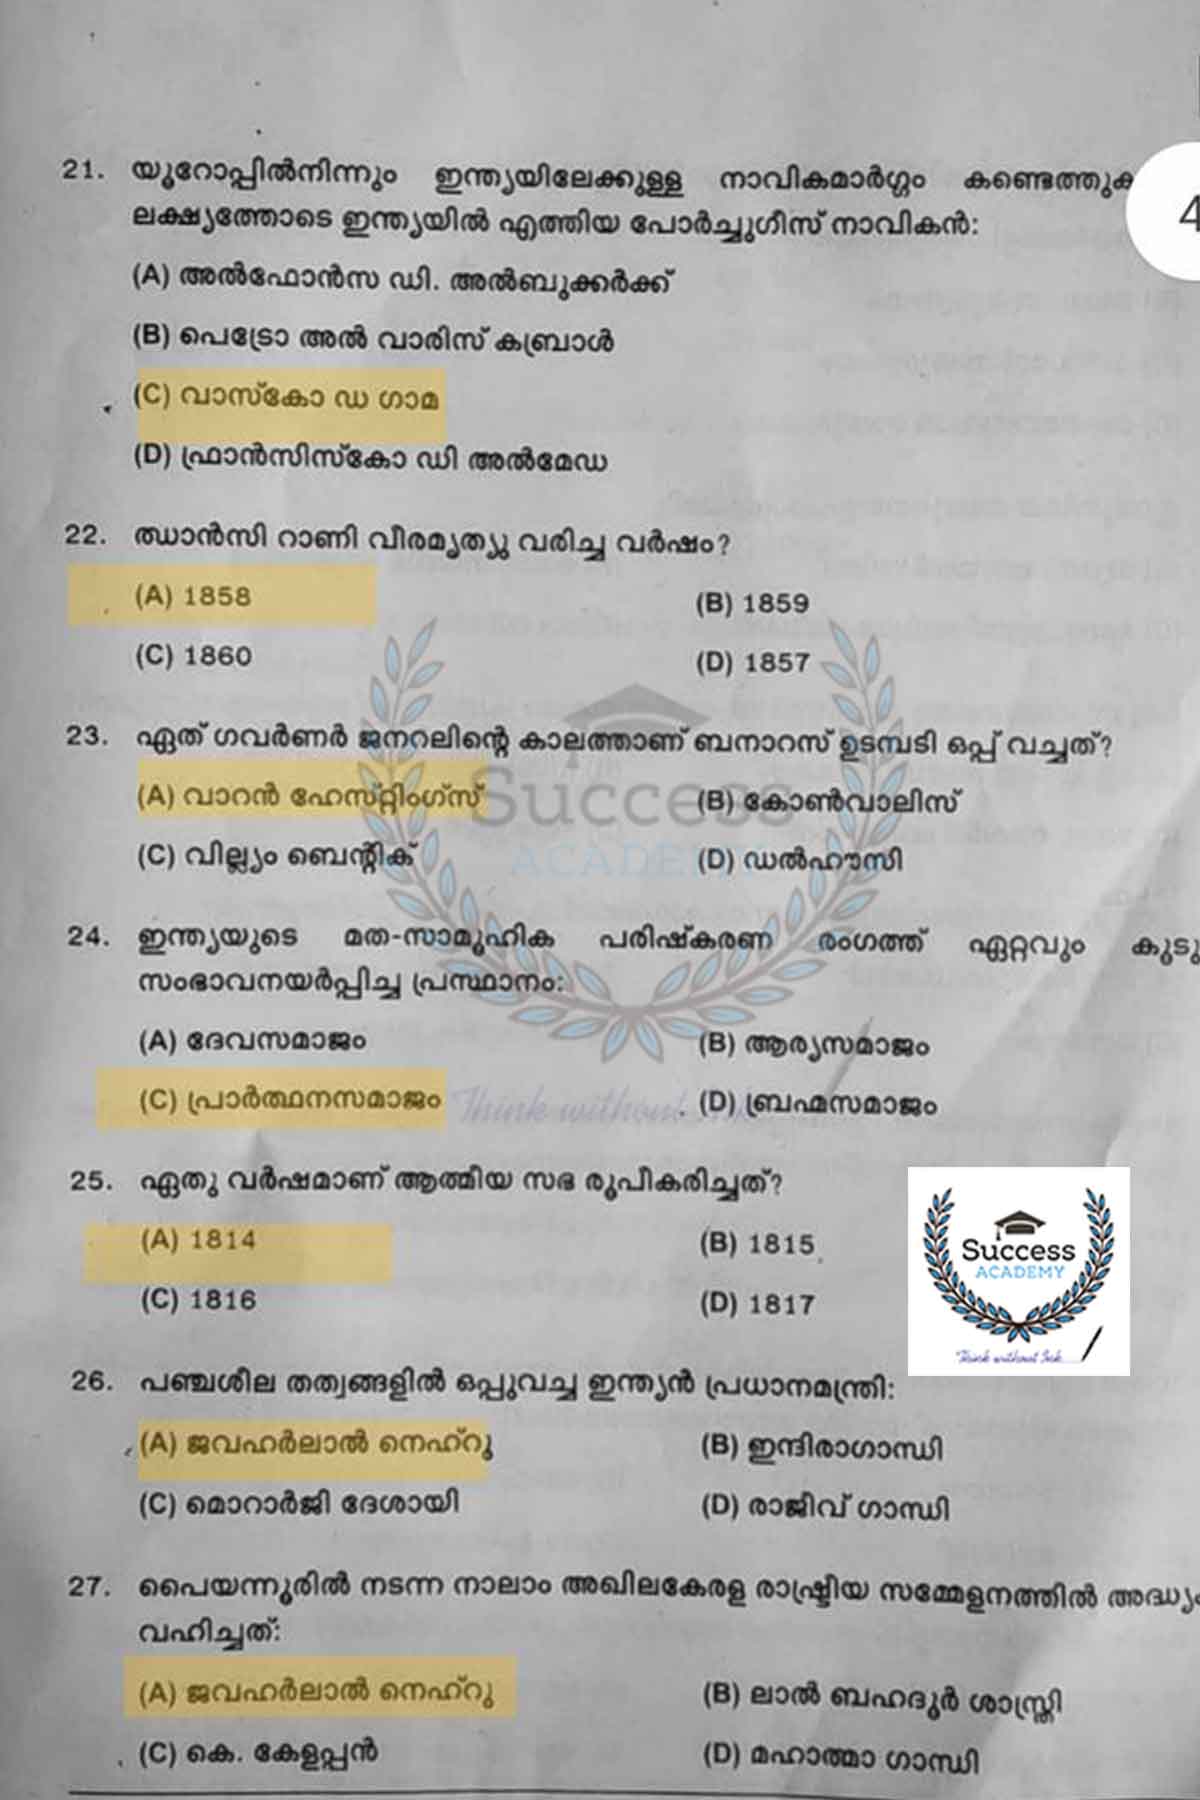 kerala-psc-10th-level-preliminary-exam-answer-key-20-february-2021-coaching-centres-in-ernakulam